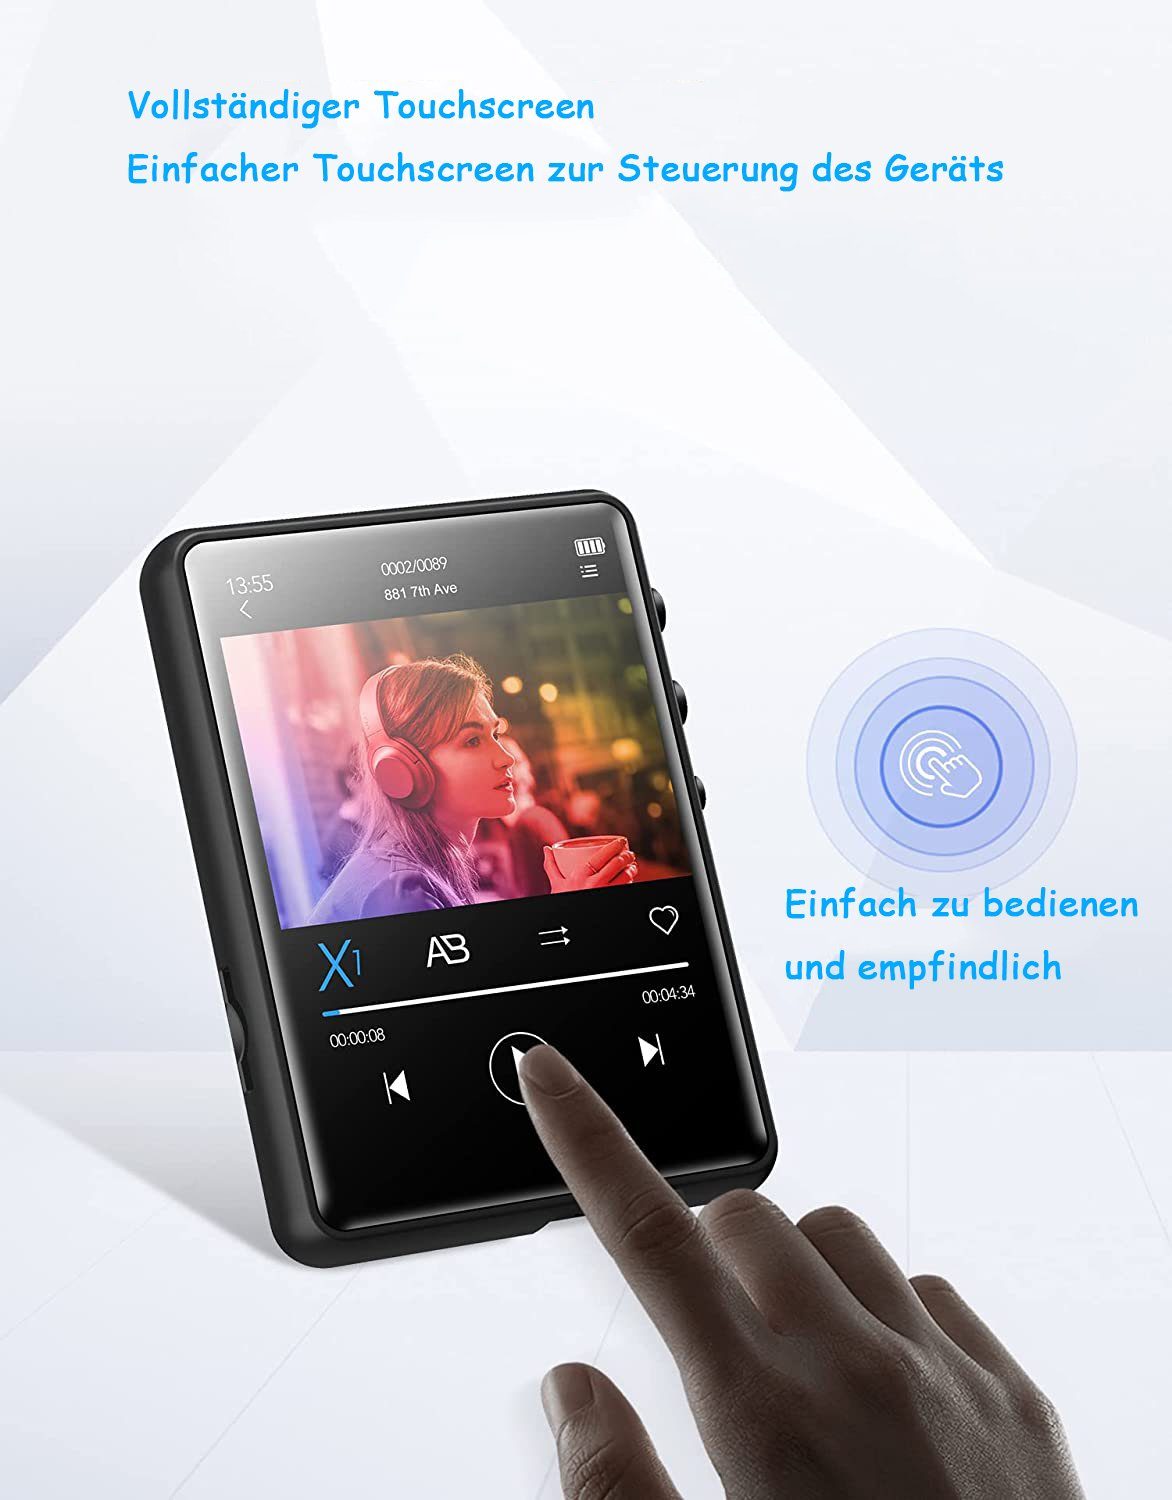 GelldG MP3-Player 16GB MP3 Player 5.0, HiFi Bluetooth Touchscreen MP3-Player